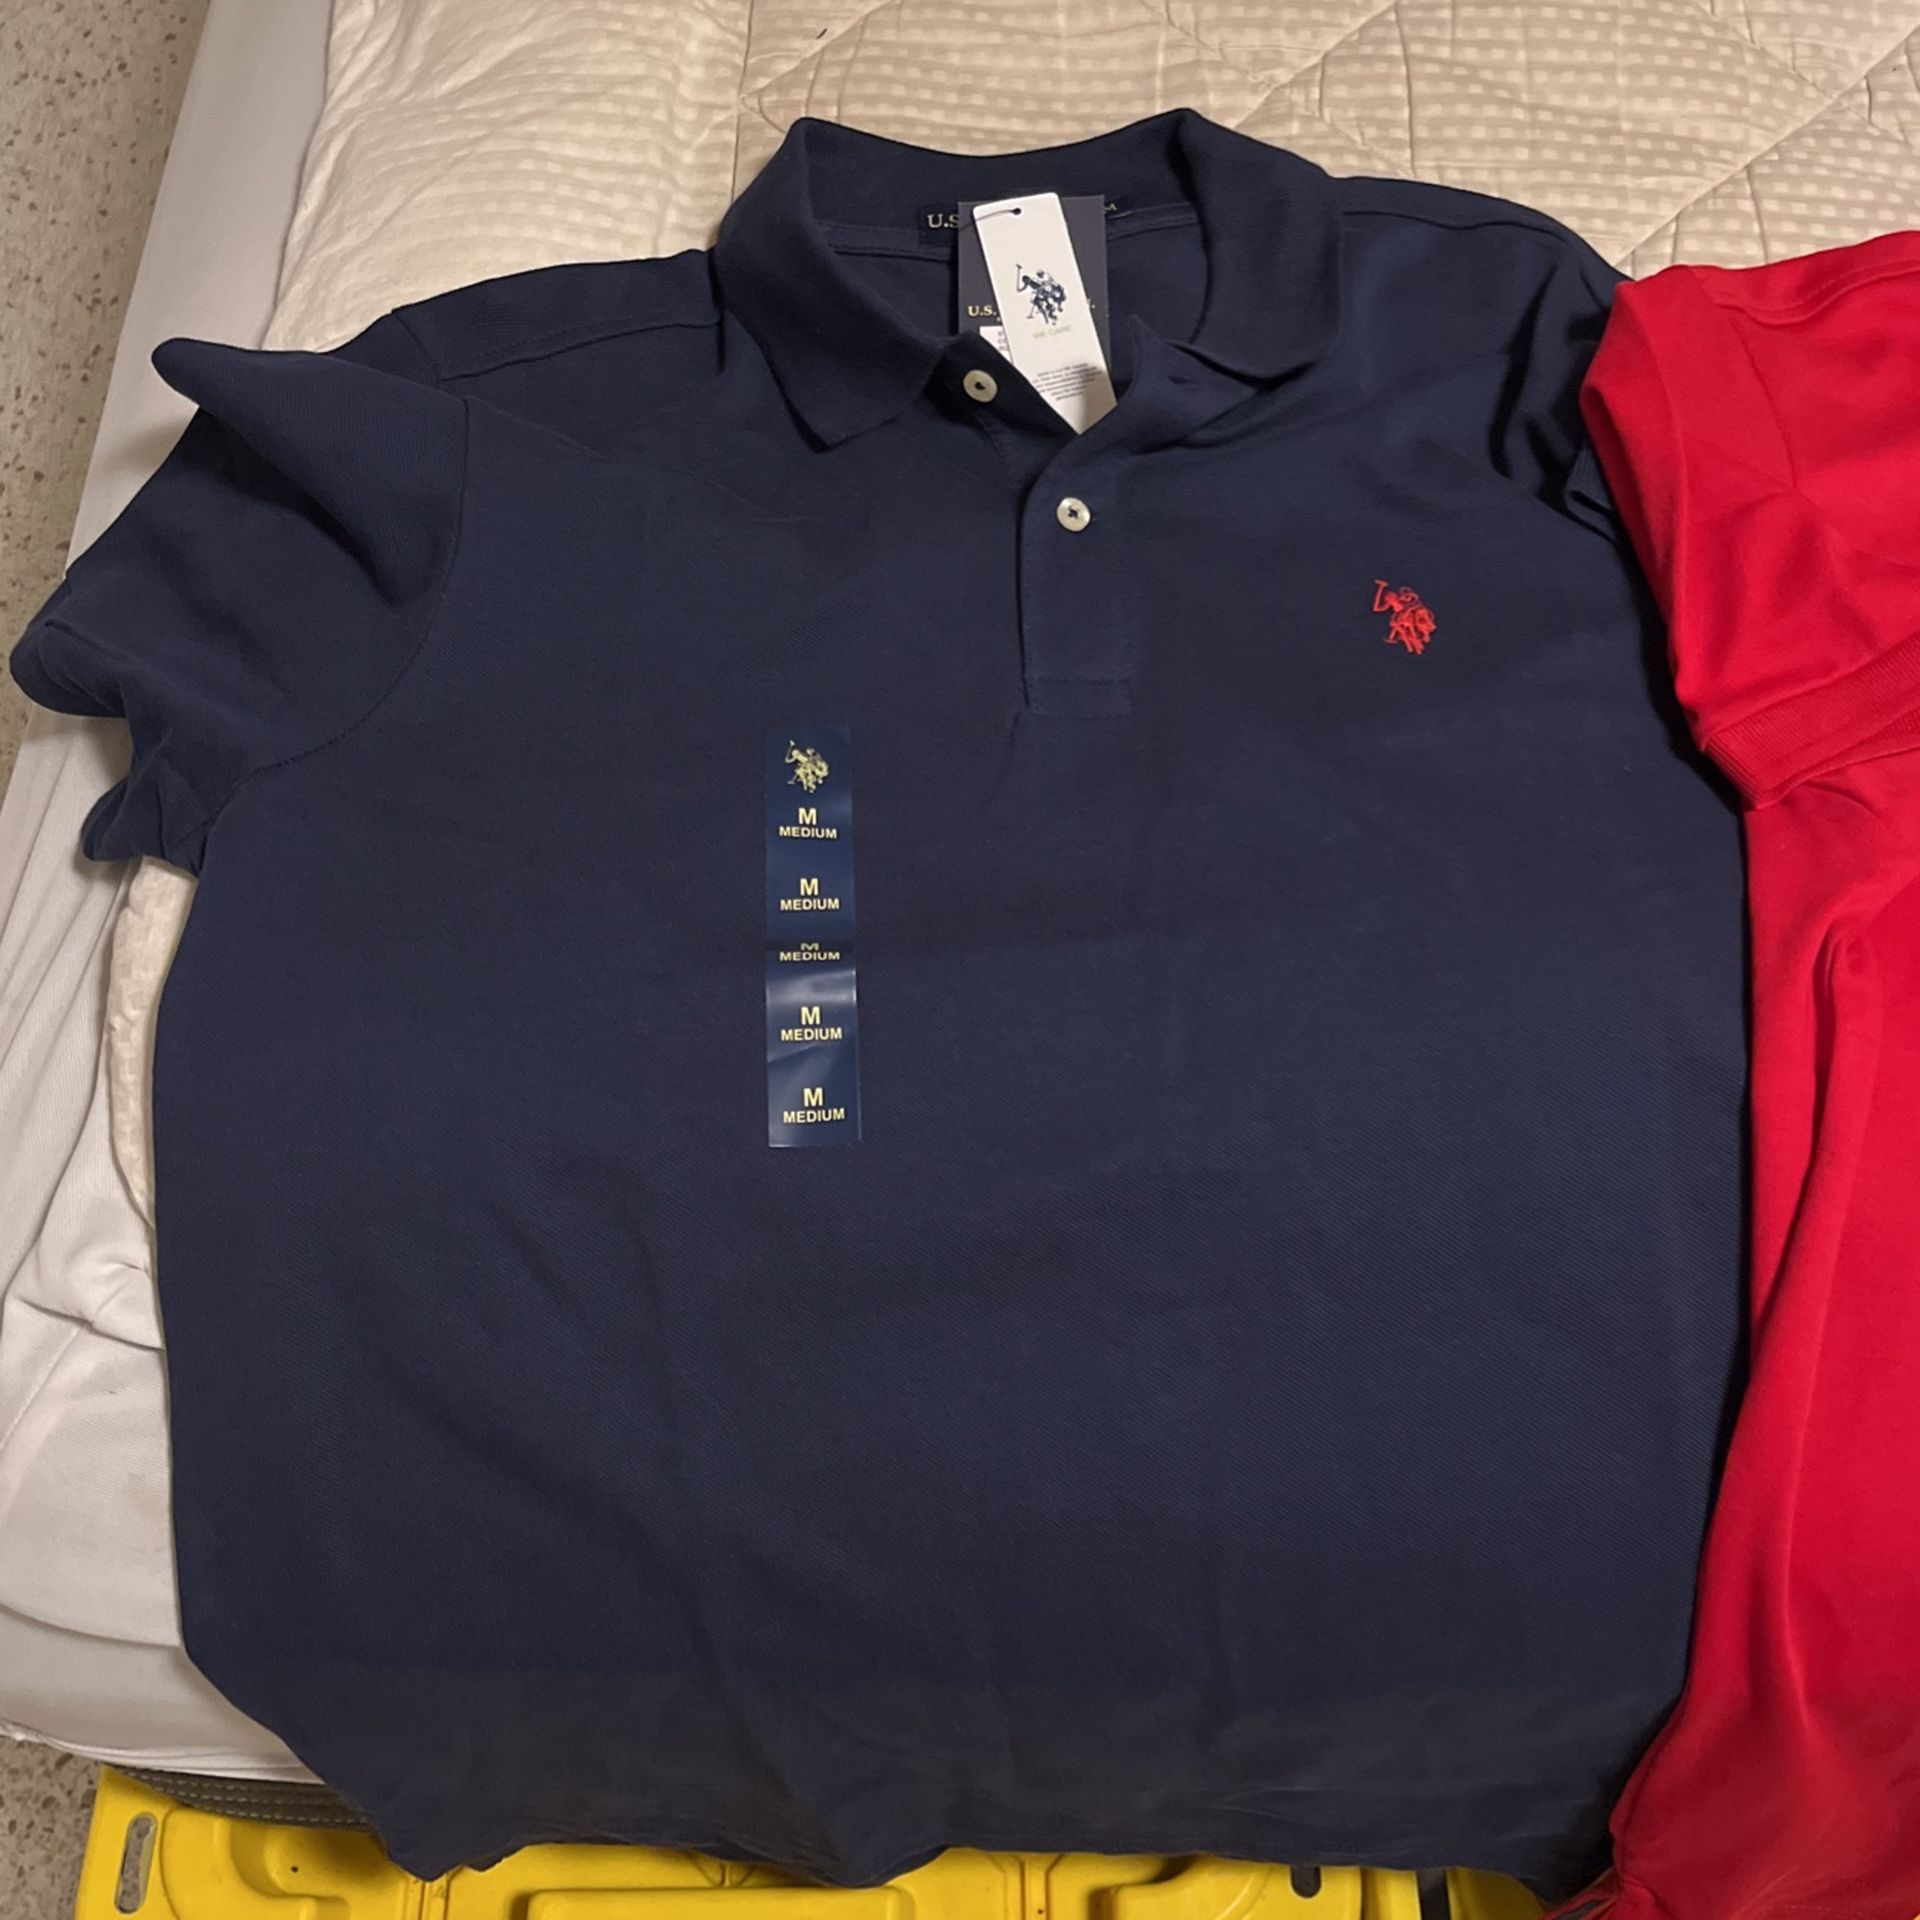 Three polo shirt, size medium